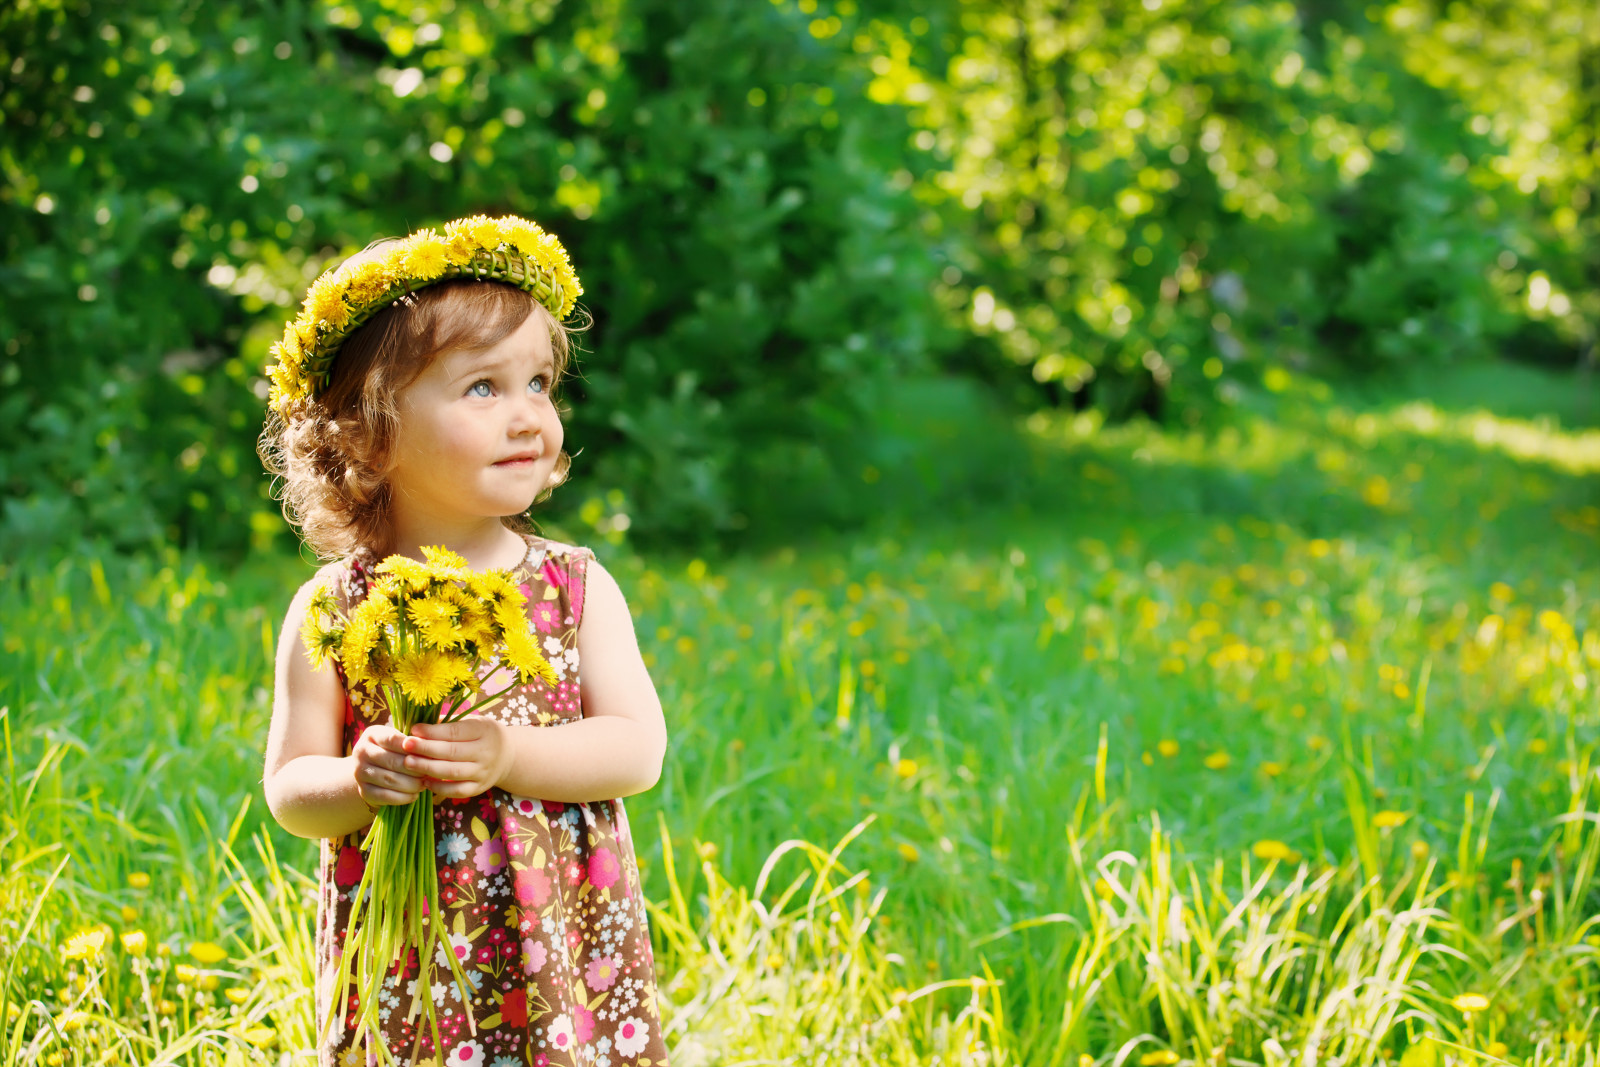 rumput, musim panas, DANDELIONS, bunga-bunga, anak, gadis kecil